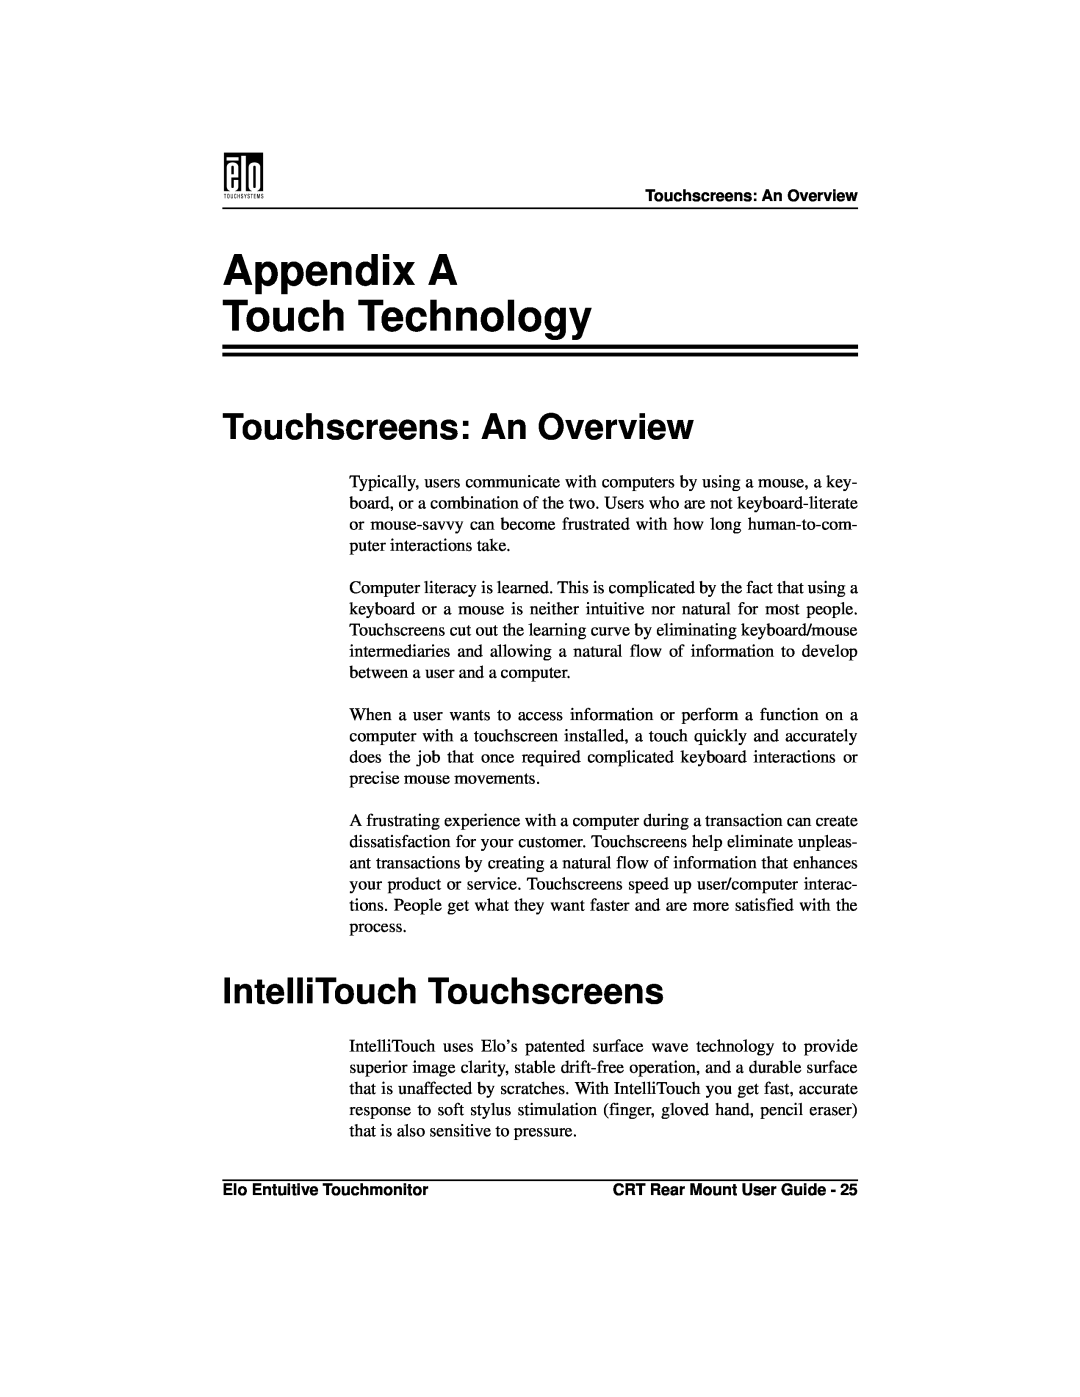 Elo TouchSystems ET1545C, ET1745C manual Appendix A Touch Technology, Touchscreens An Overview, IntelliTouch Touchscreens 